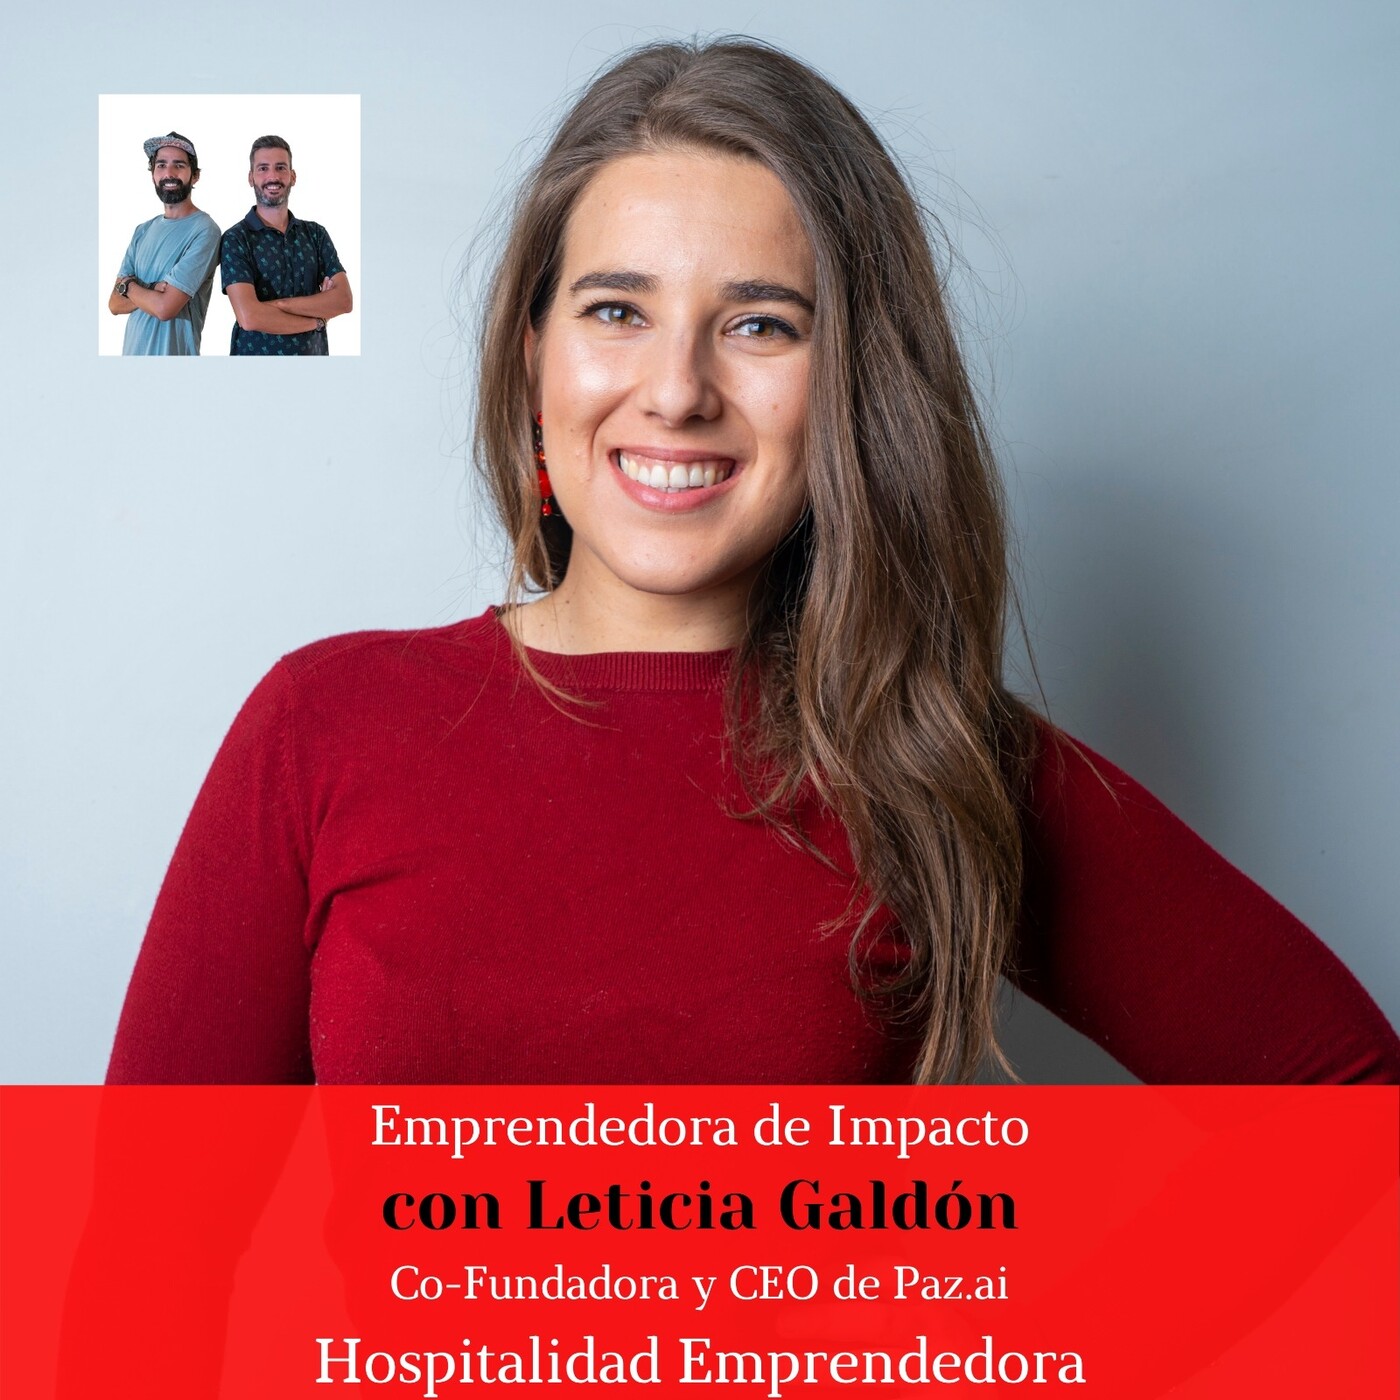 Emprendedora de impacto con Leticia Galdón. Temp 4 Episodio 3